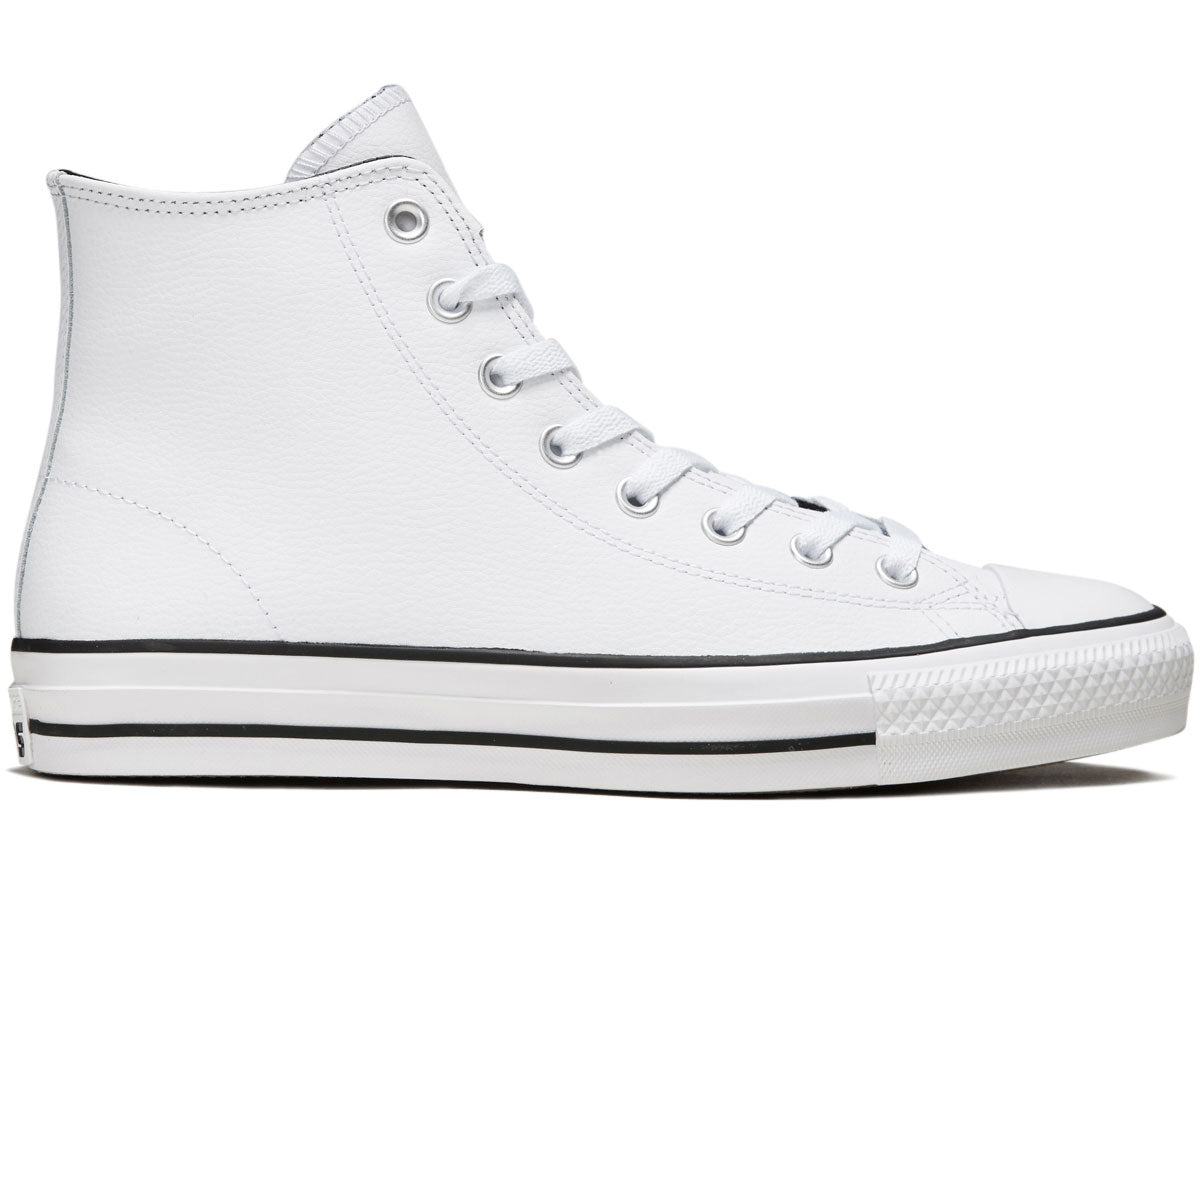 Converse Ctas Pro Hi Shoes - White/White/Black image 1